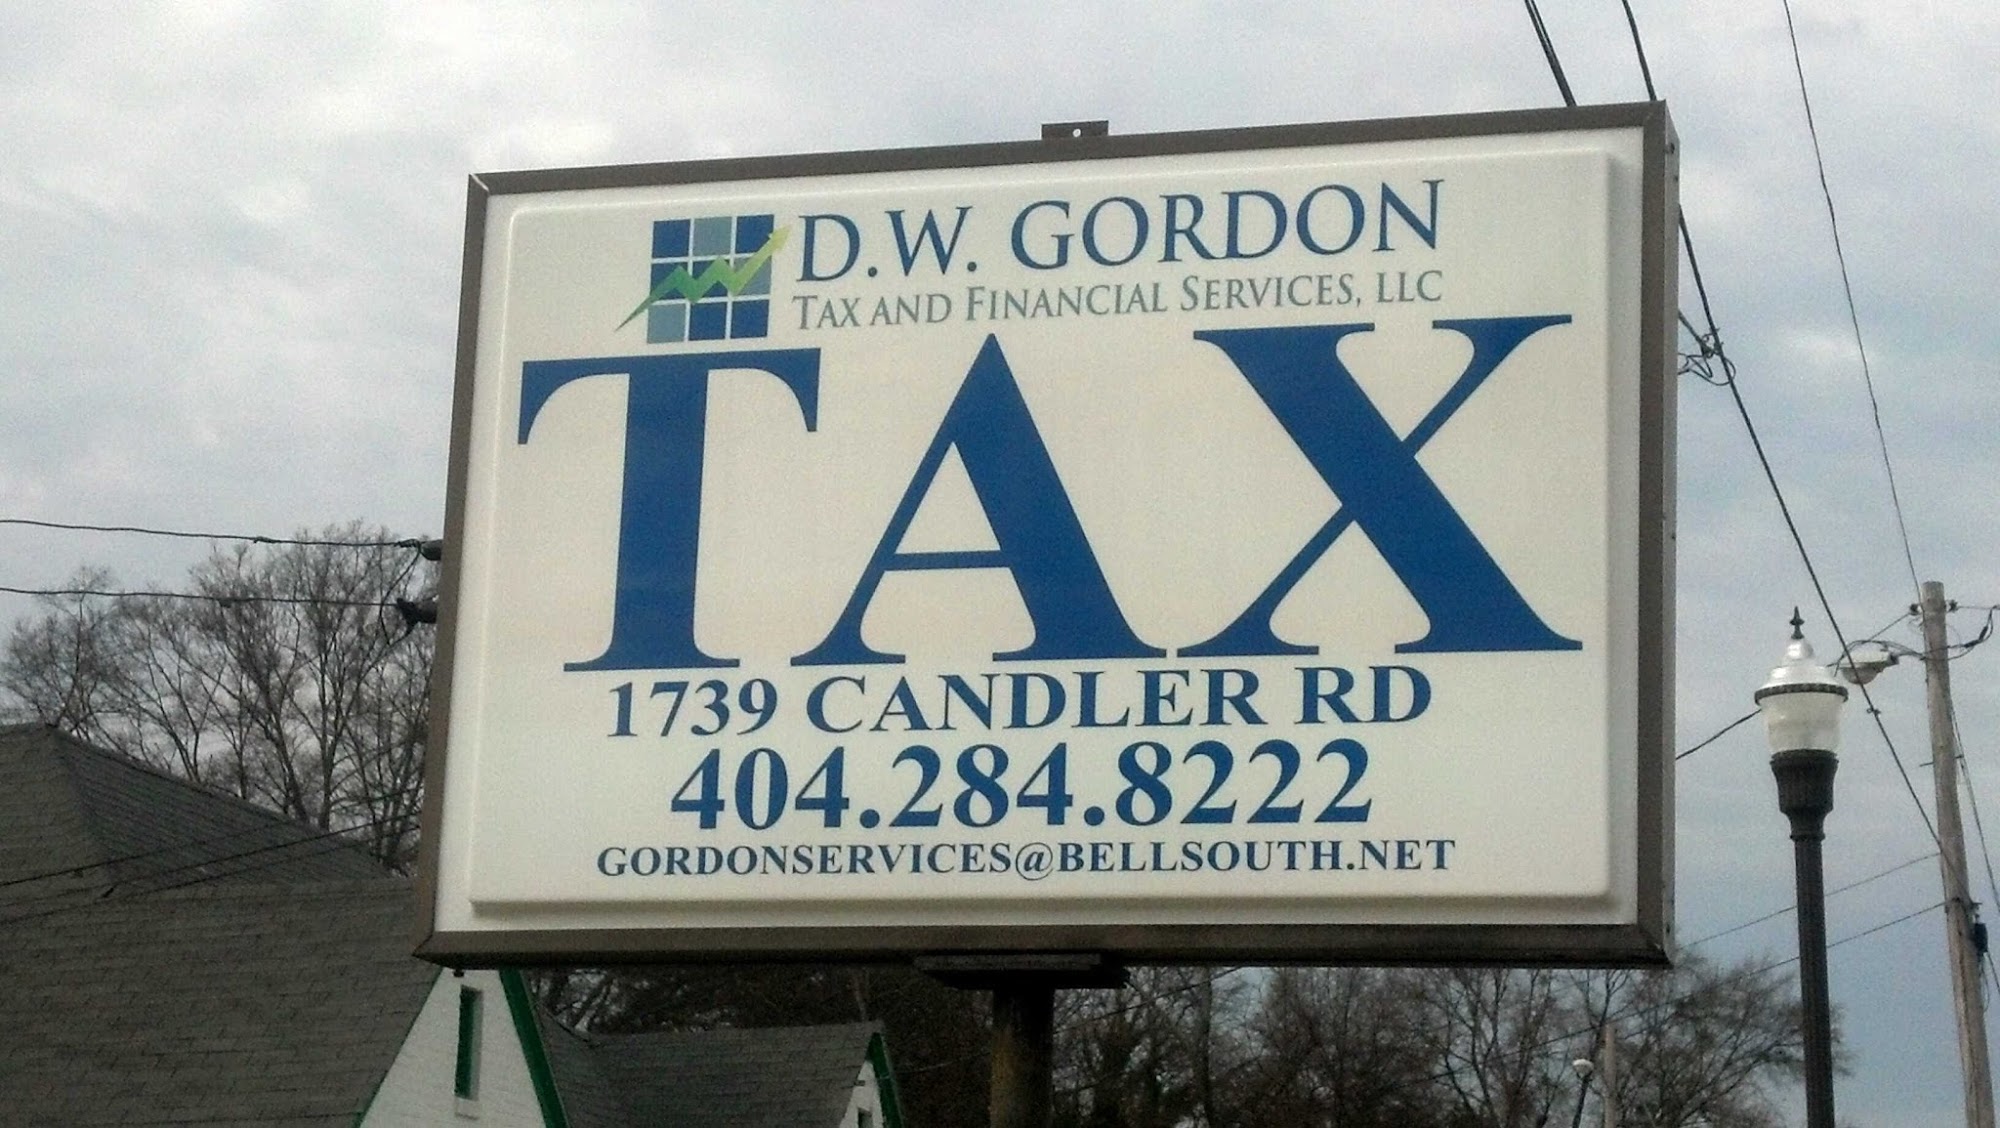 D.W. Gordon Tax and Financial Services LLC.